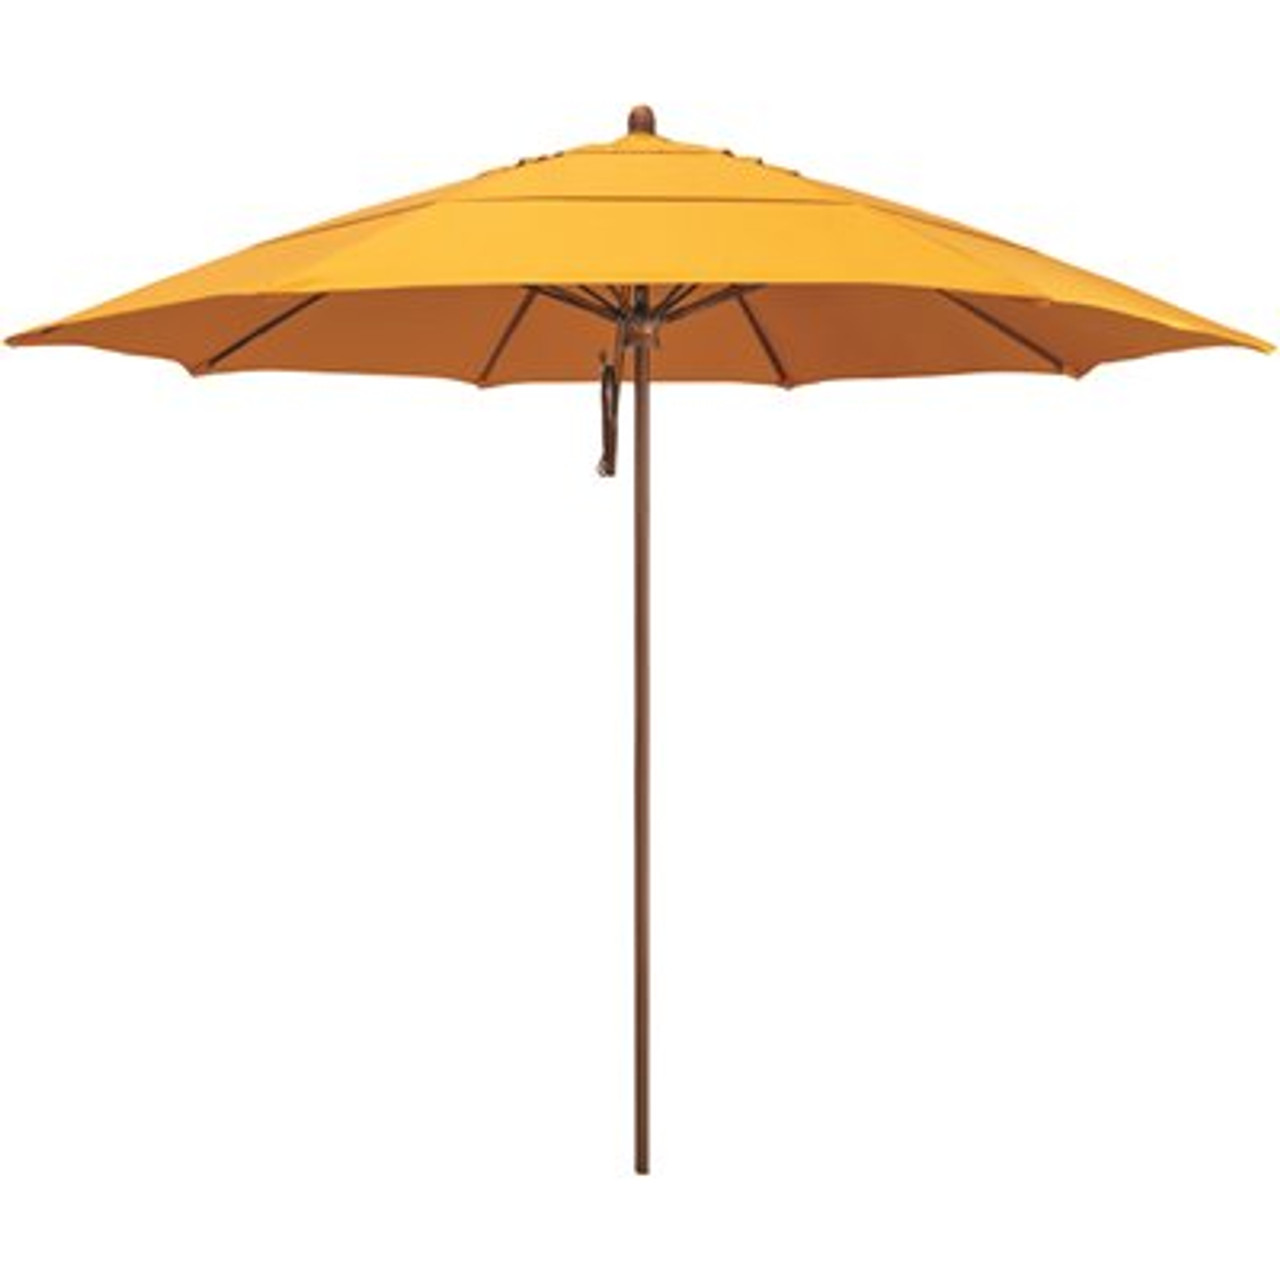 11 ft. Woodgrain Aluminum Commercial Market Patio Umbrella Fiberglass Ribs and Pulley Lift in Sunflower Yellow Sunbrella